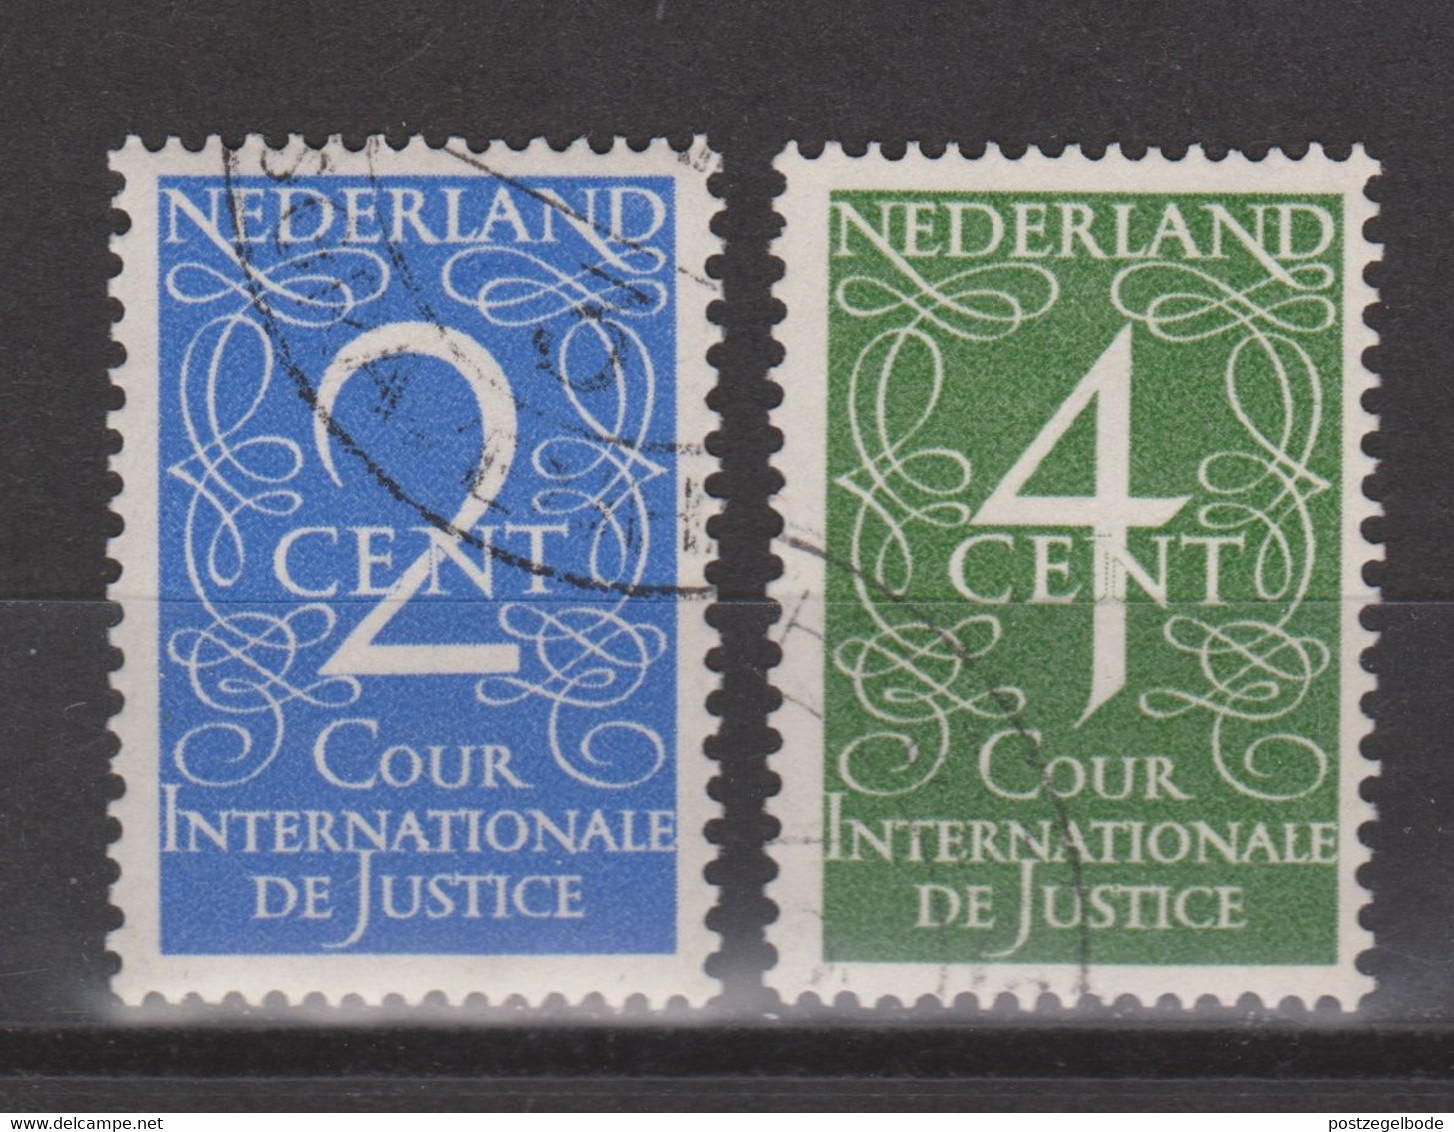 NVPH Nederland Netherlands Pays Bas Niederlande Holanda 25-26 Used Dienst Zegel Service Stamp Timbre Cour Sello Oficio - Officials